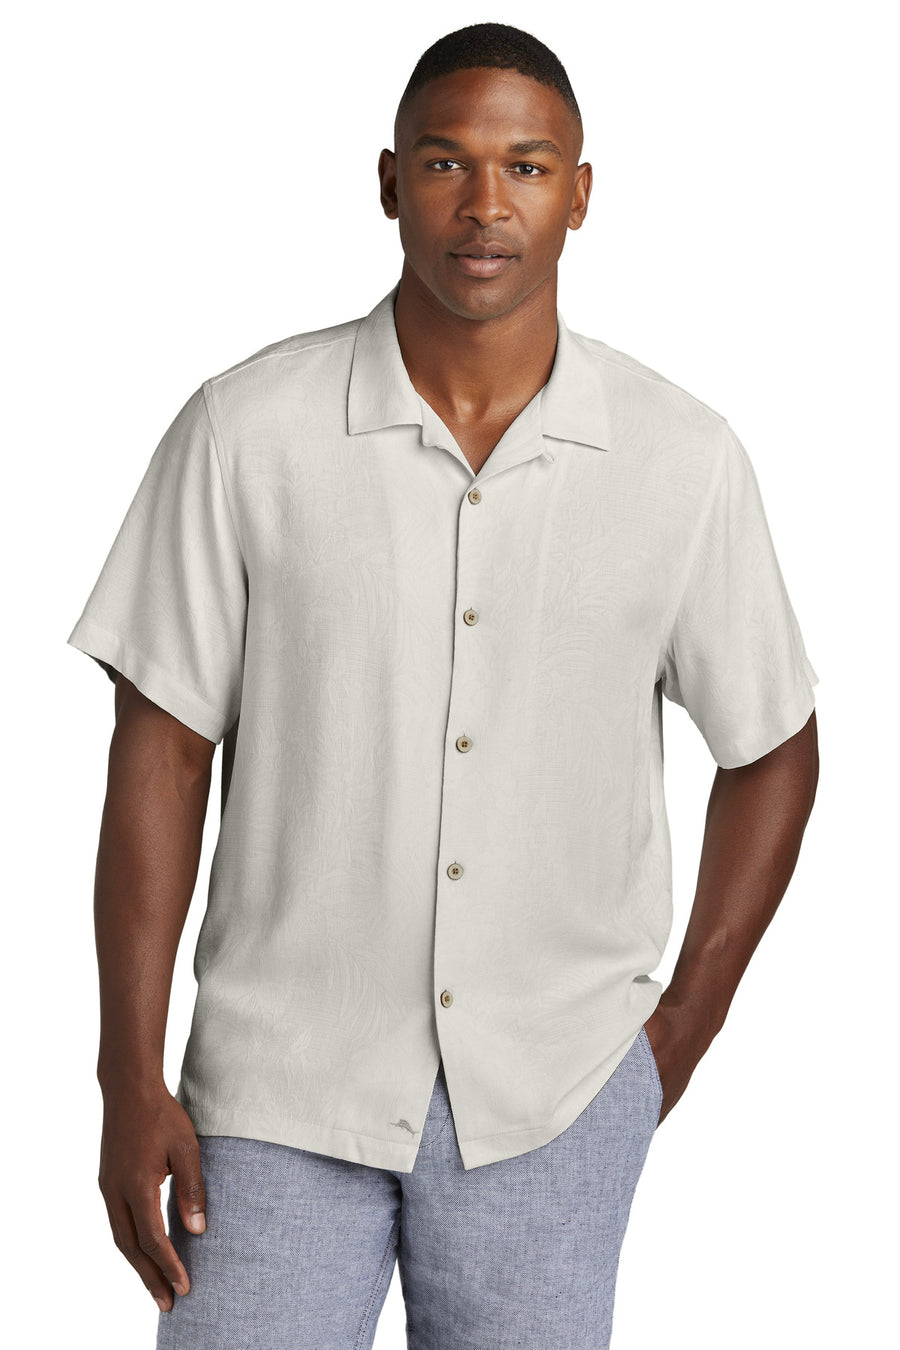 LIMITED EDITION Tommy Bahama Tropic Isles Short Sleeve Shirt